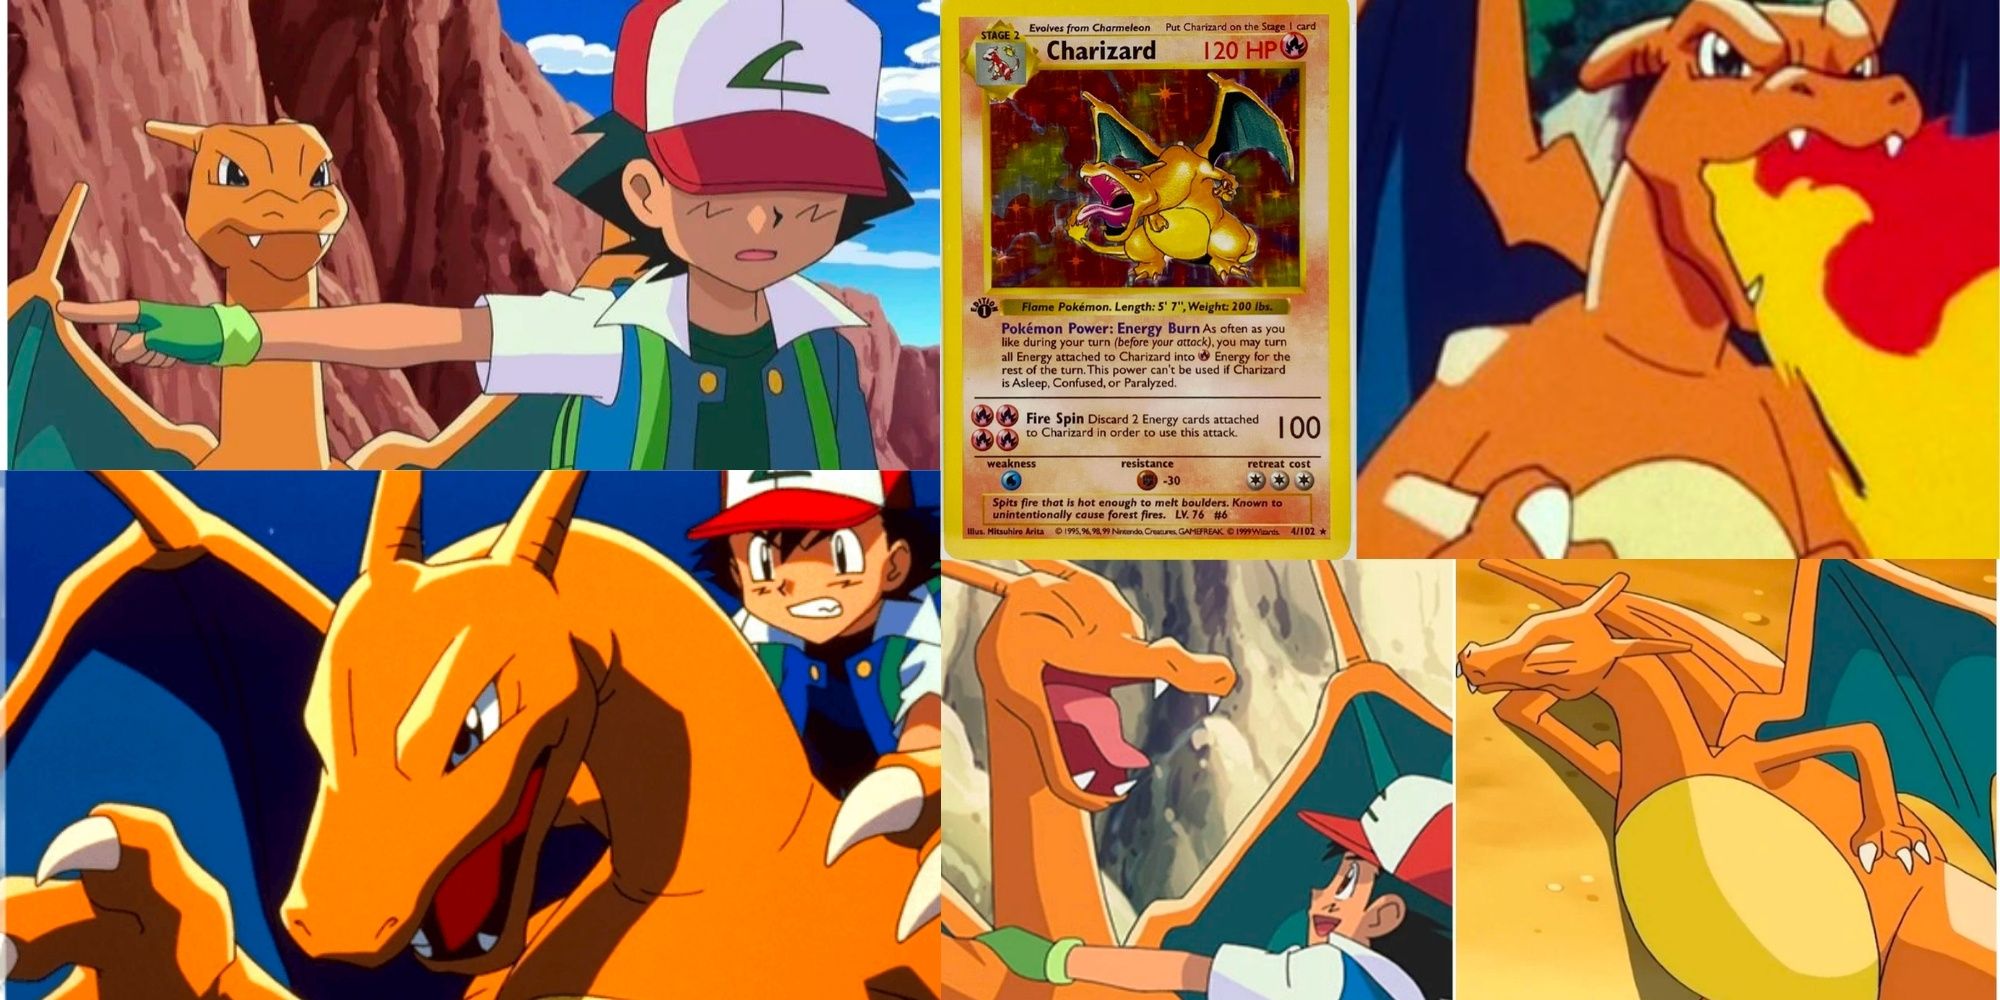 Many attitudes of Charizard with Ash and rare pokemon card Nintendo Game and Anime Pokemon